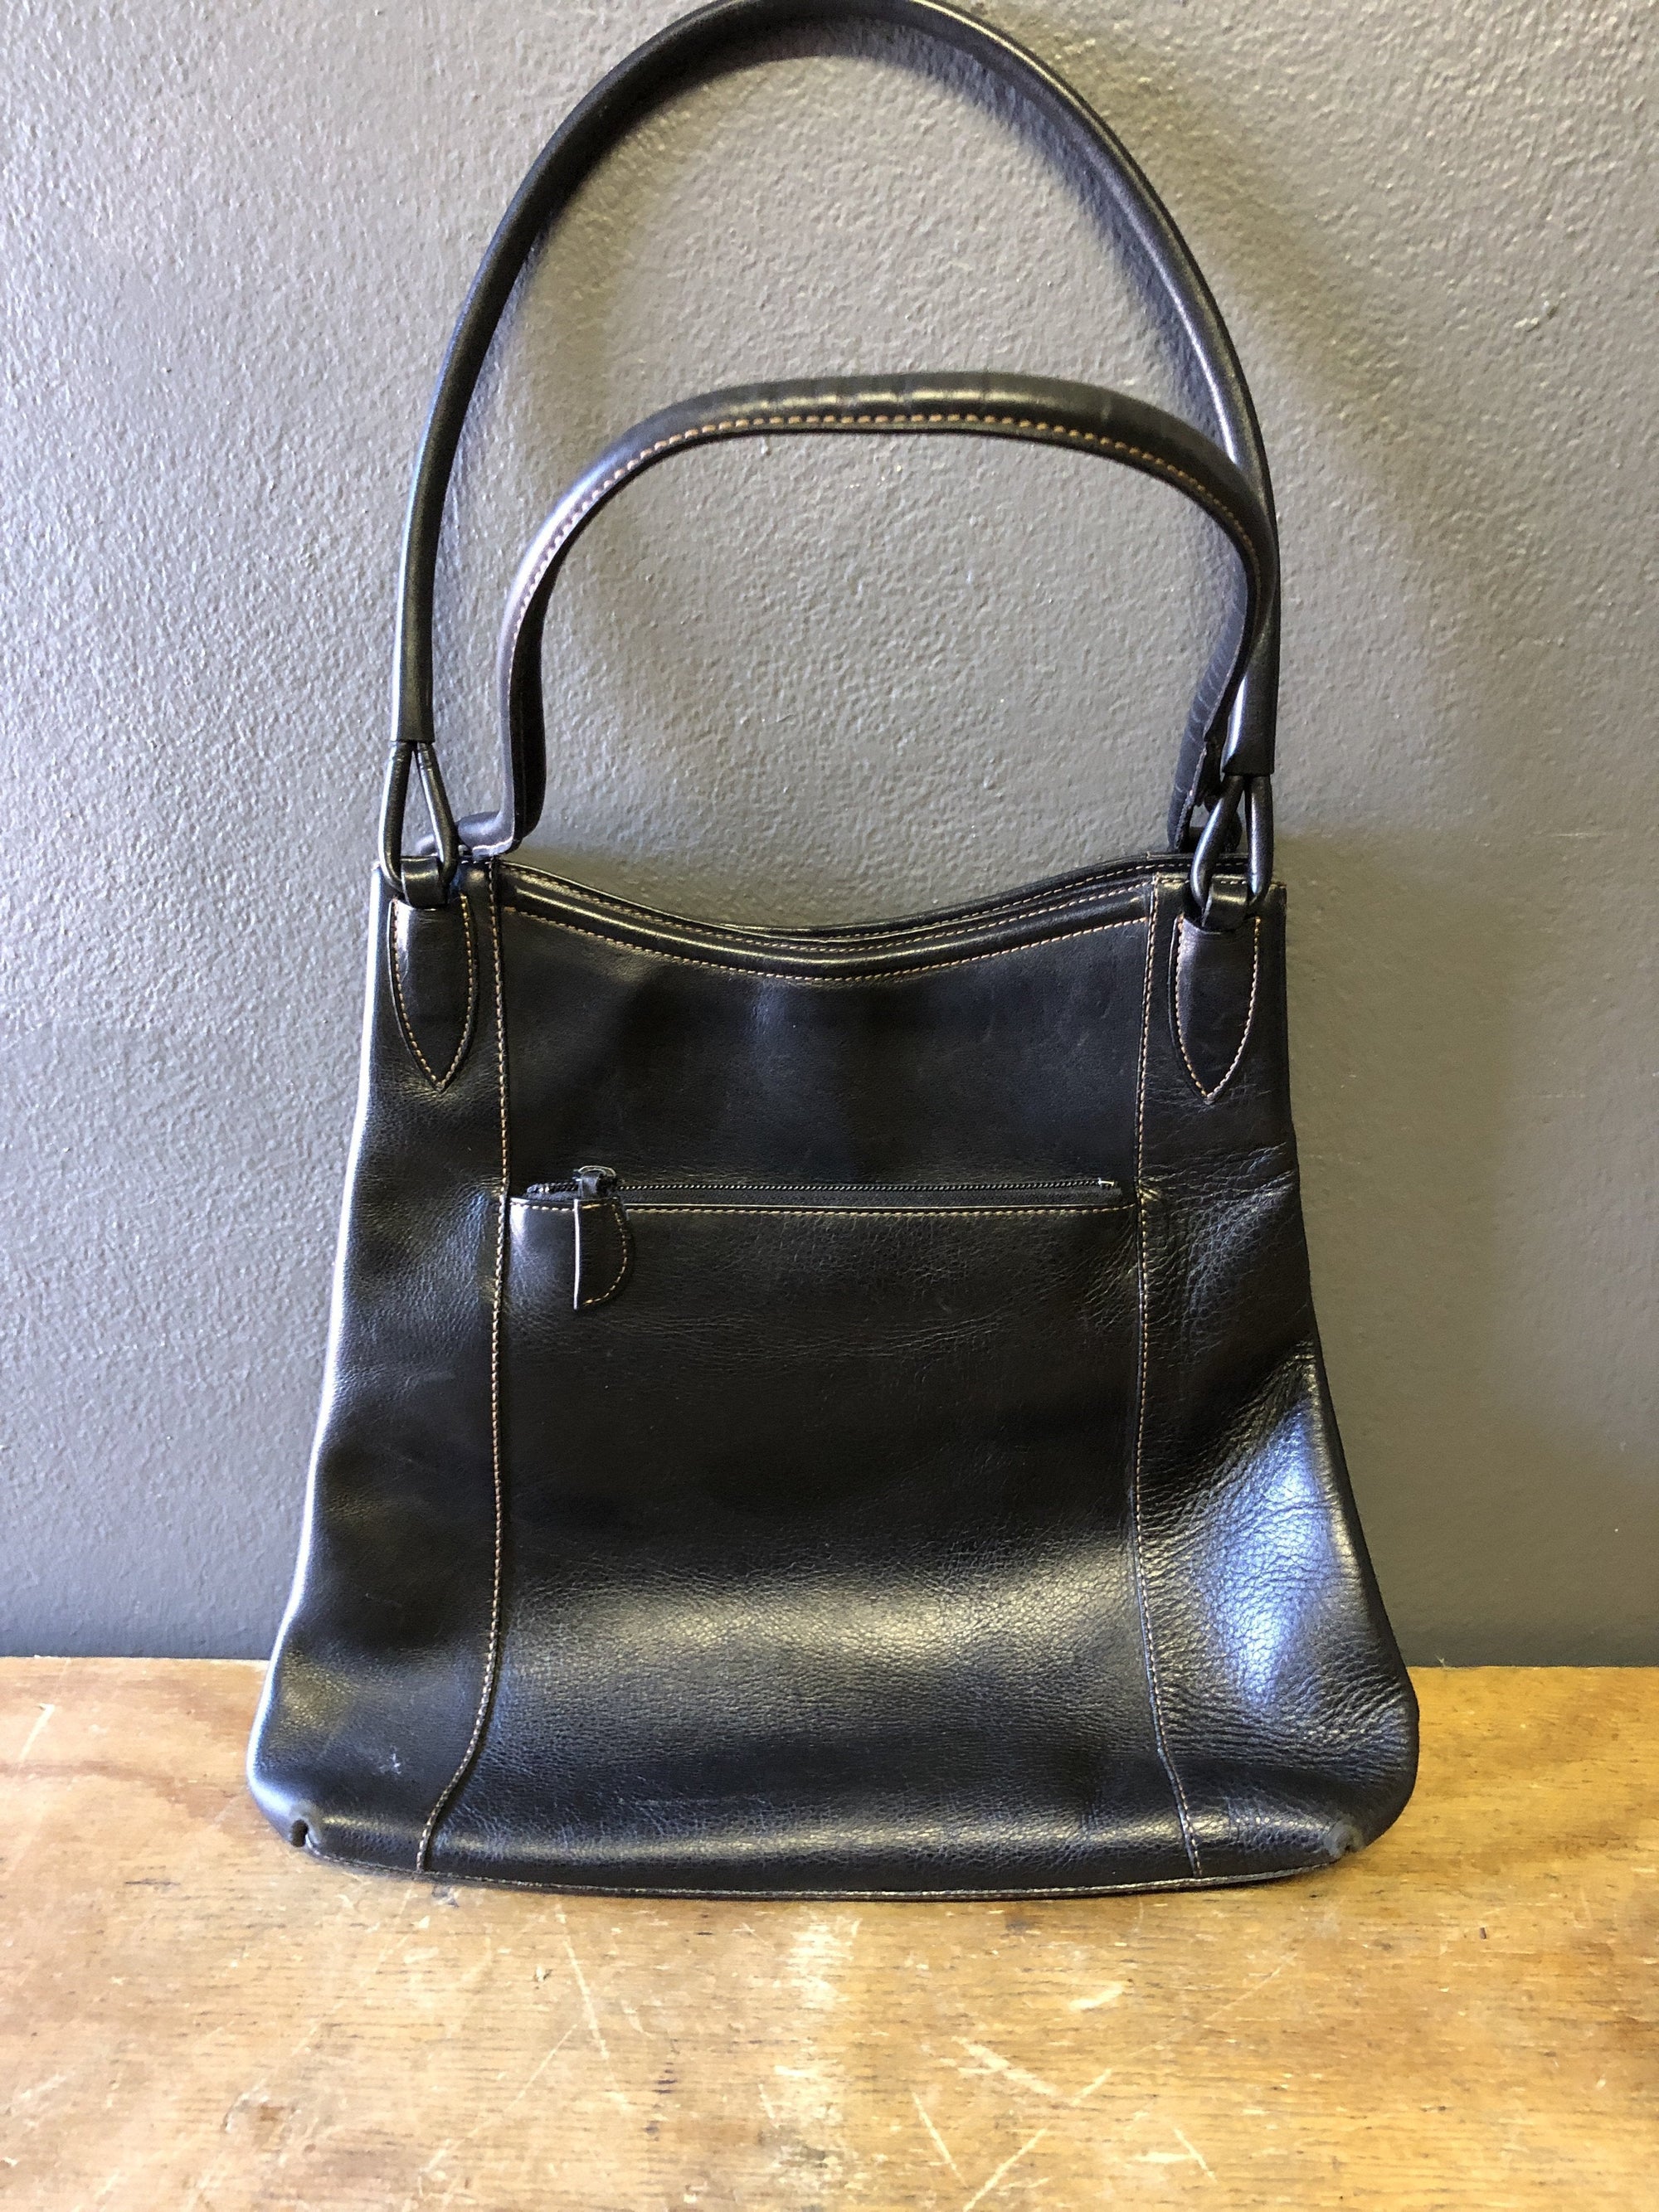 Black handbag - 2ndhandwarehouse.com